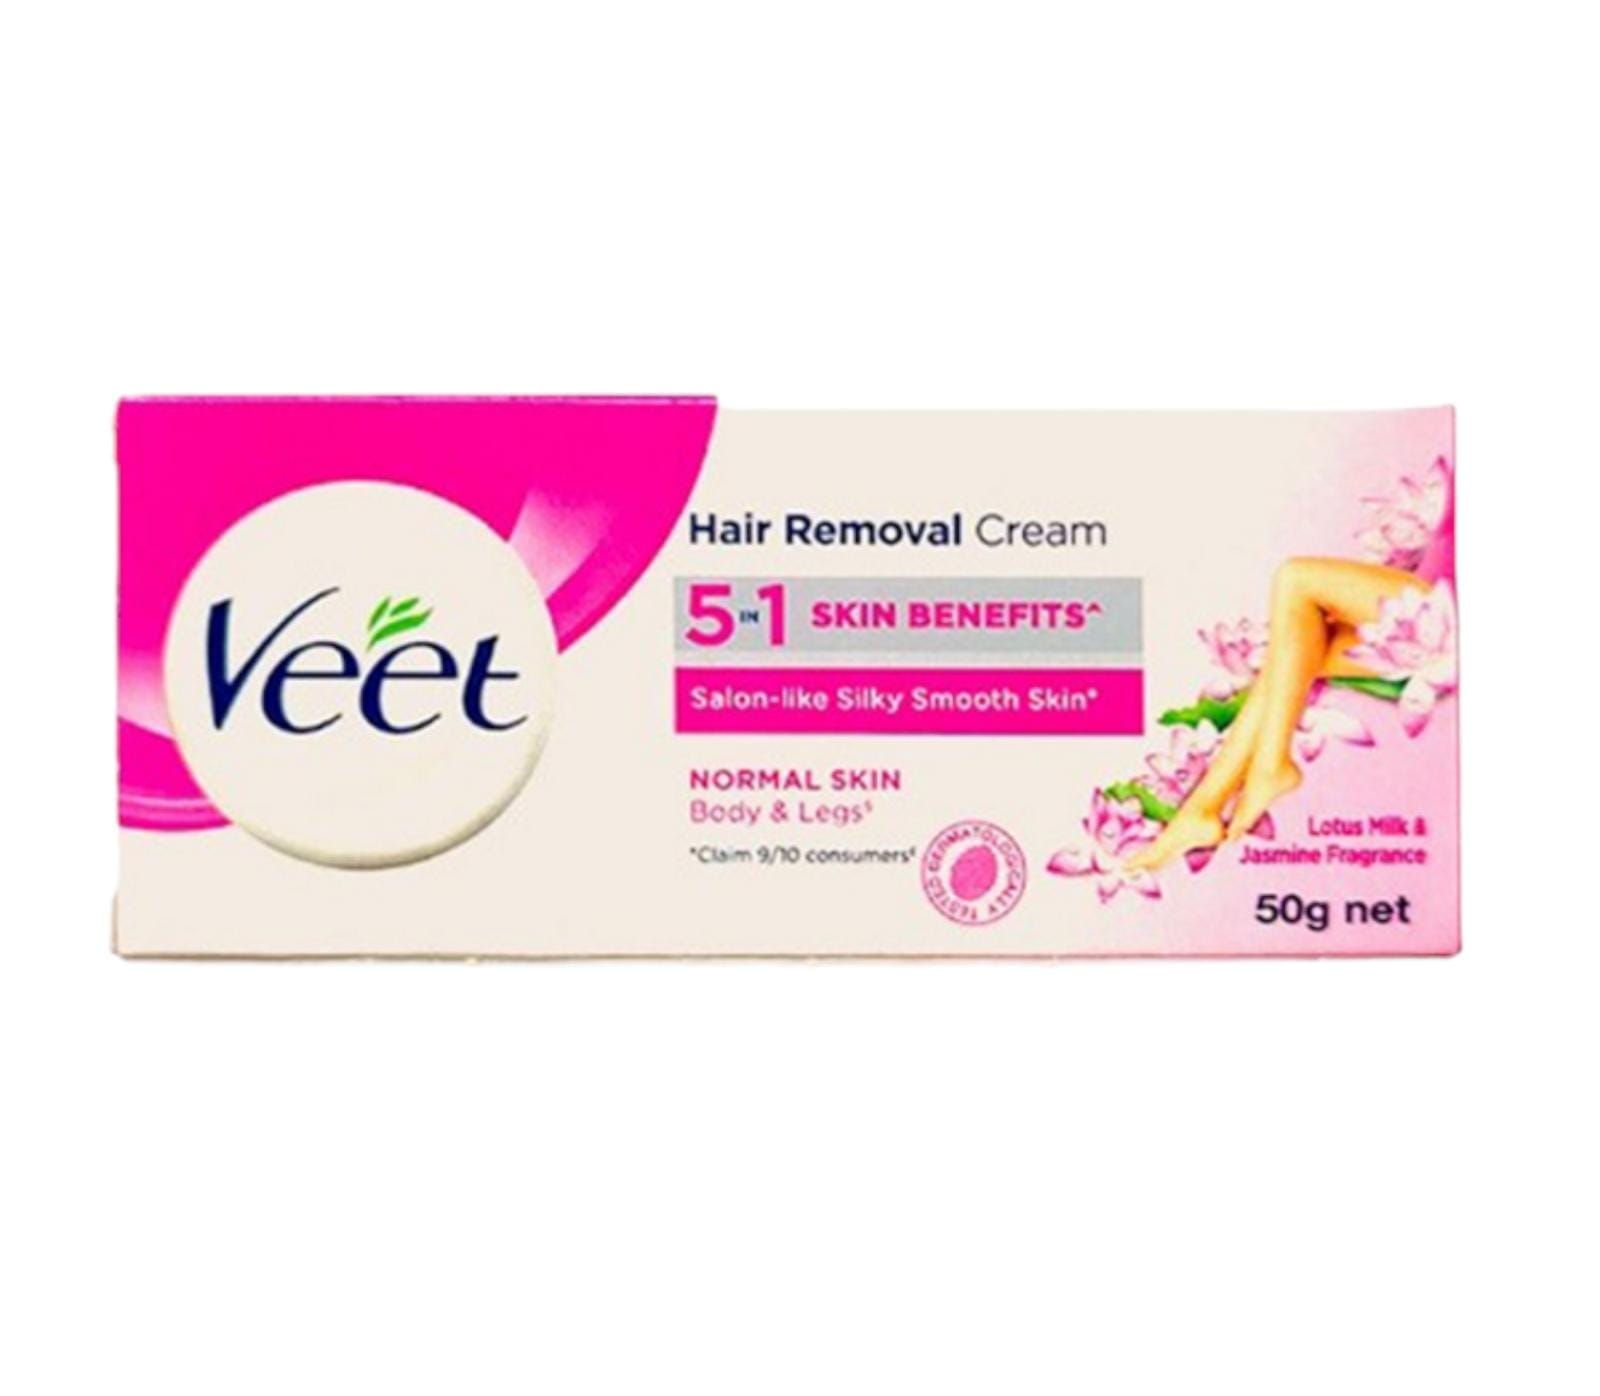 Veet Hair removal cream